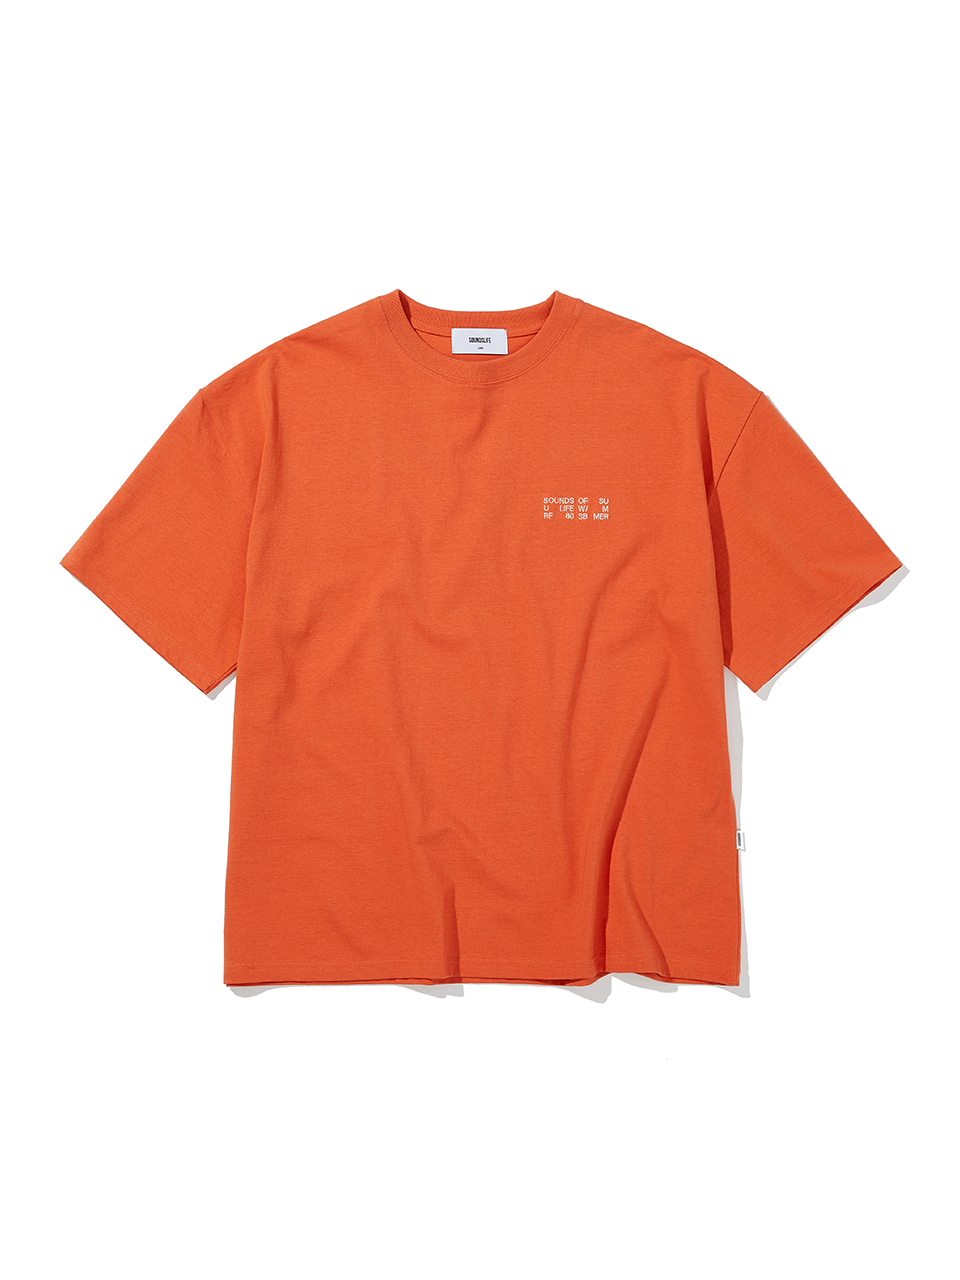 SOUNDSLIFE - Vacation Graphic T-Shirt Orange